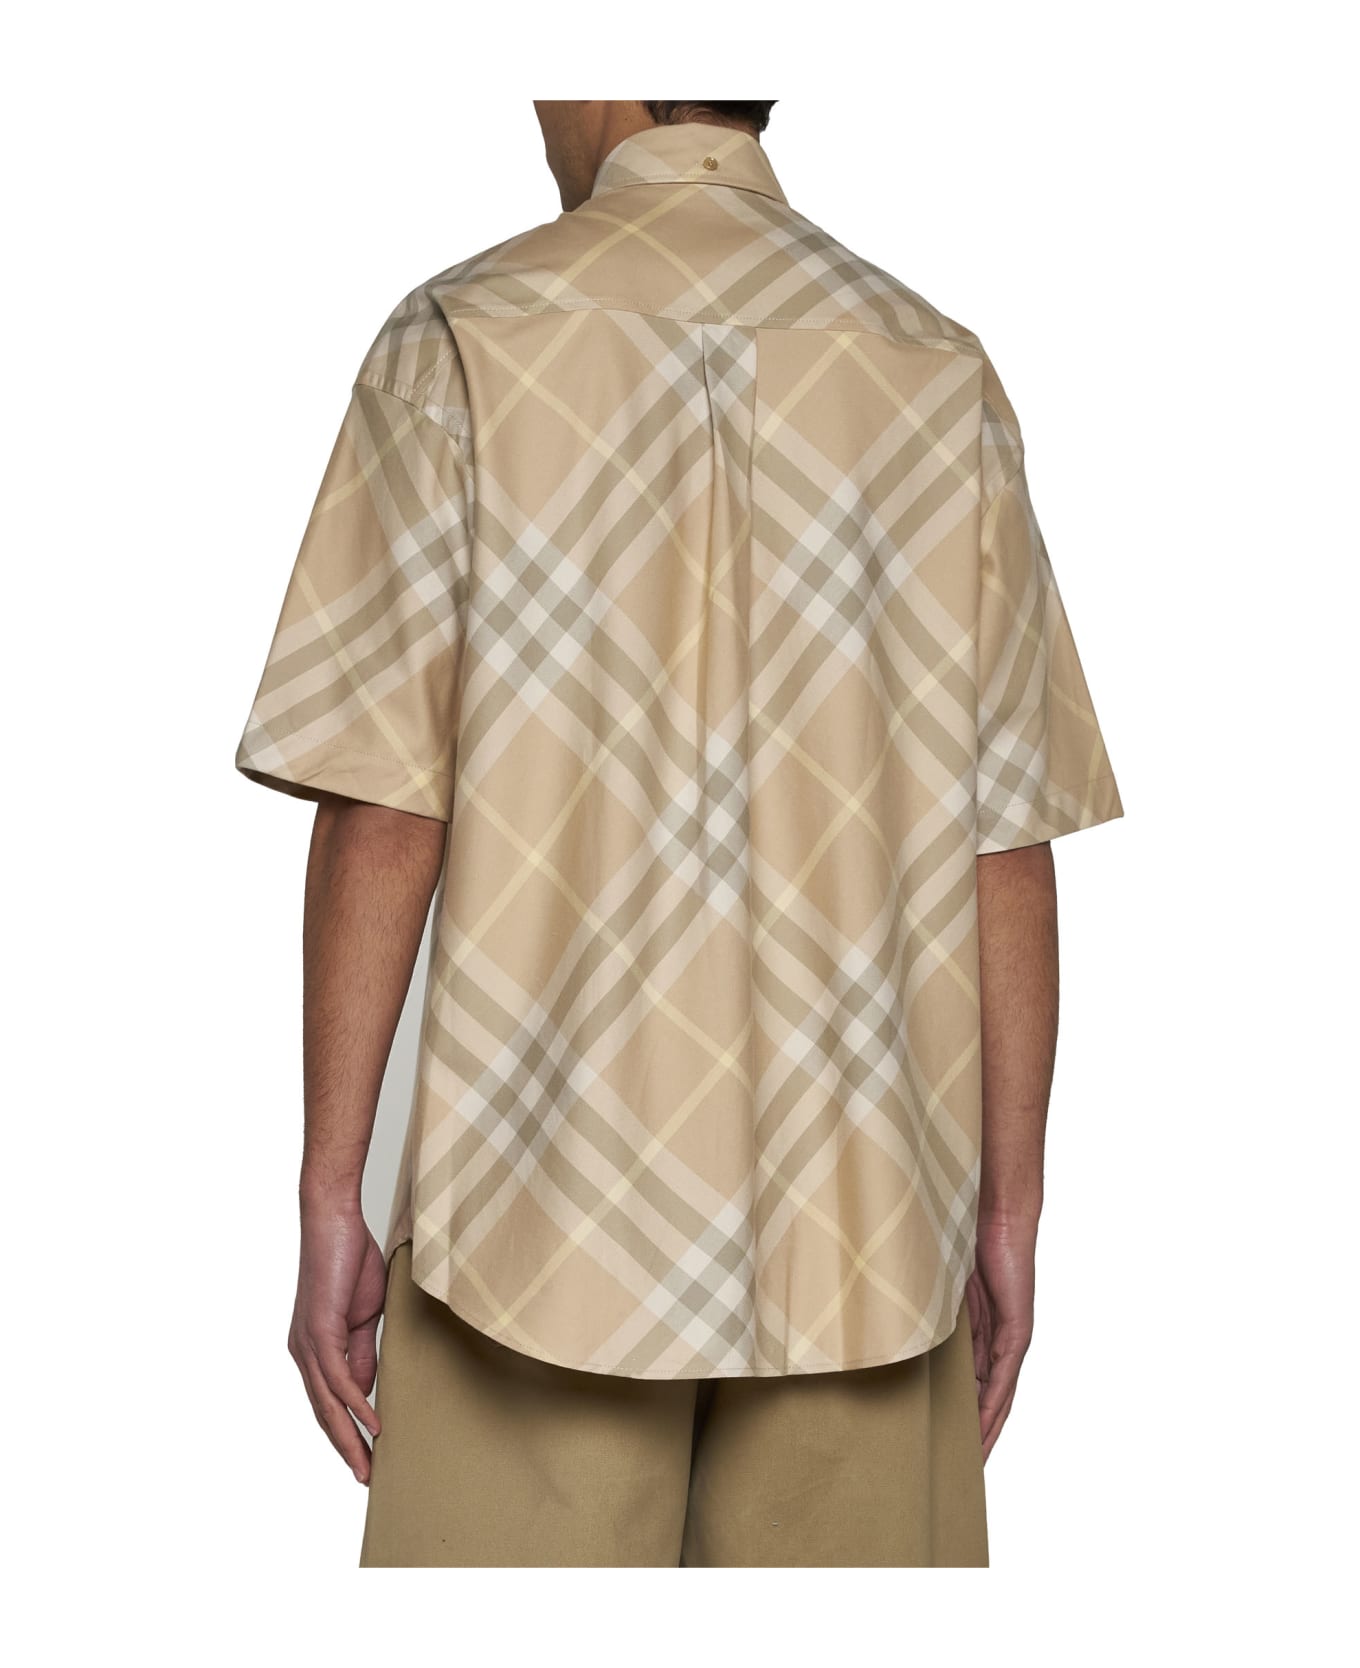 Burberry Check Motif Yellow Short Sleeves Shirt - Beige